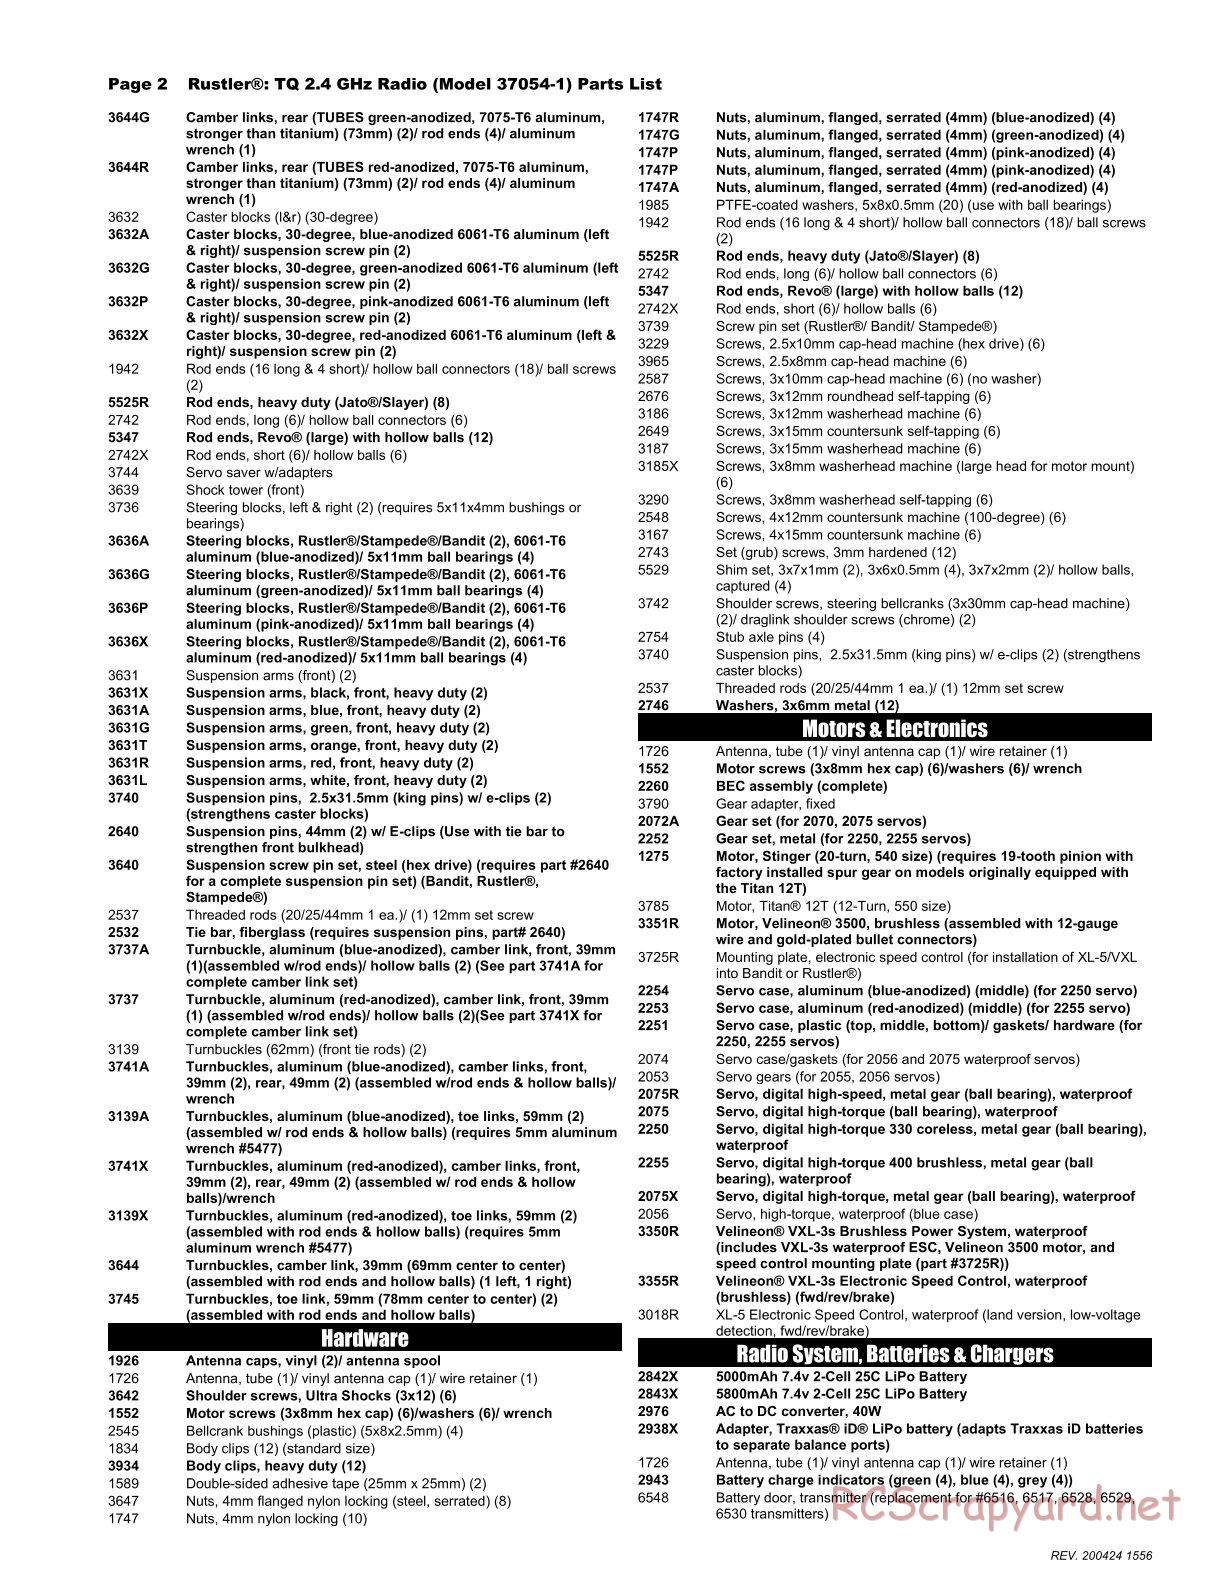 Traxxas - Rustler XL-5 - Parts List - Page 2